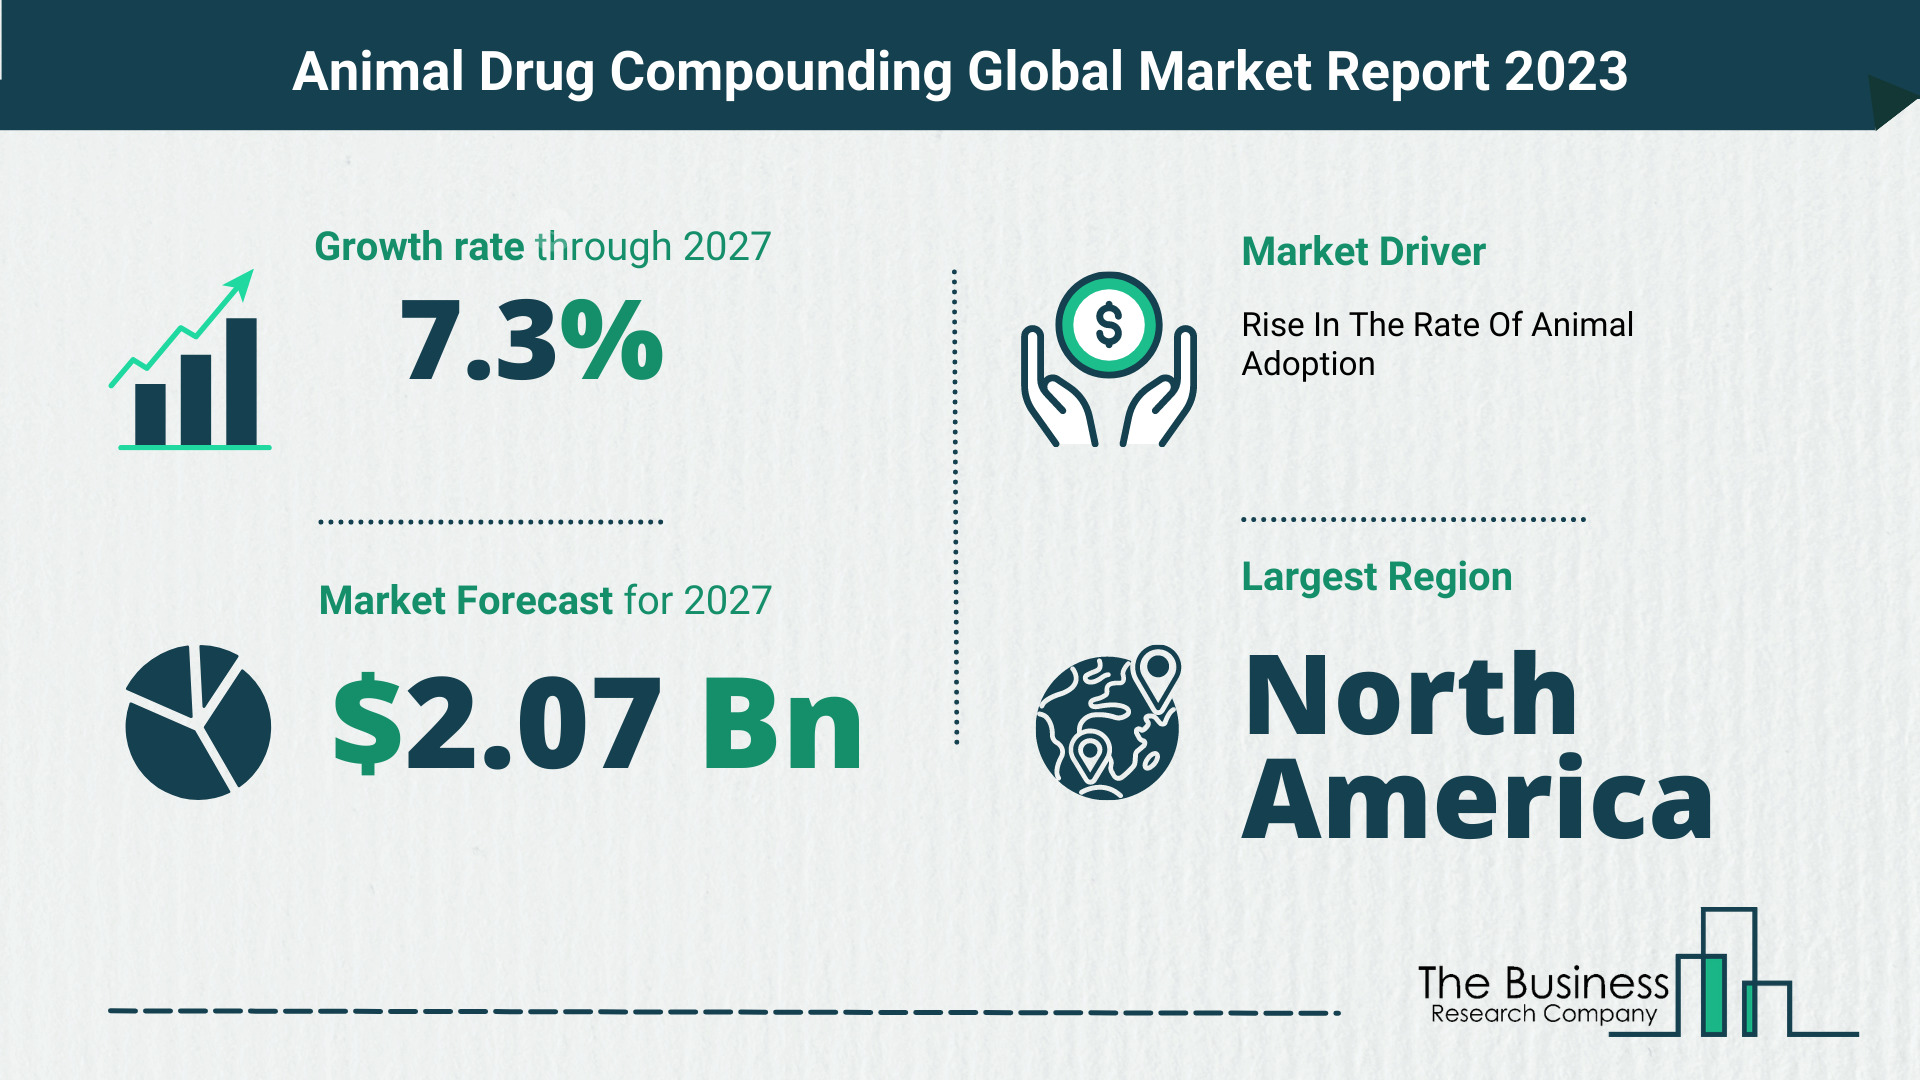 Global Animal Drug Compounding Market